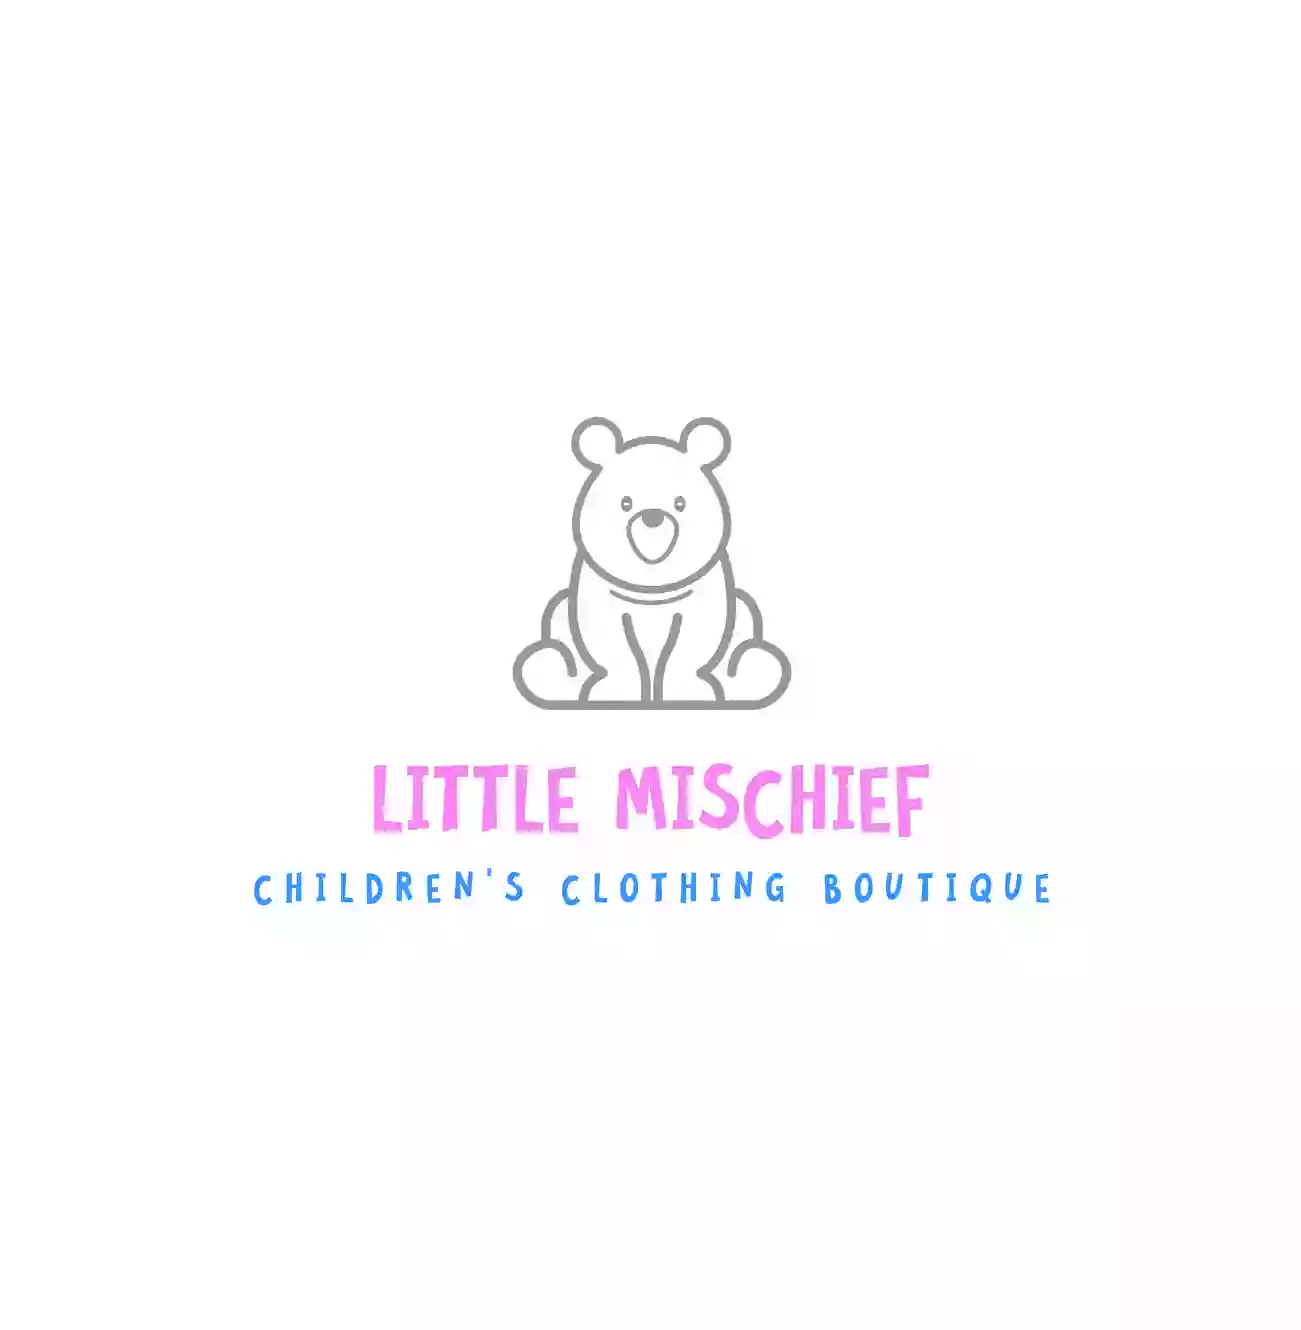 Little Mischief